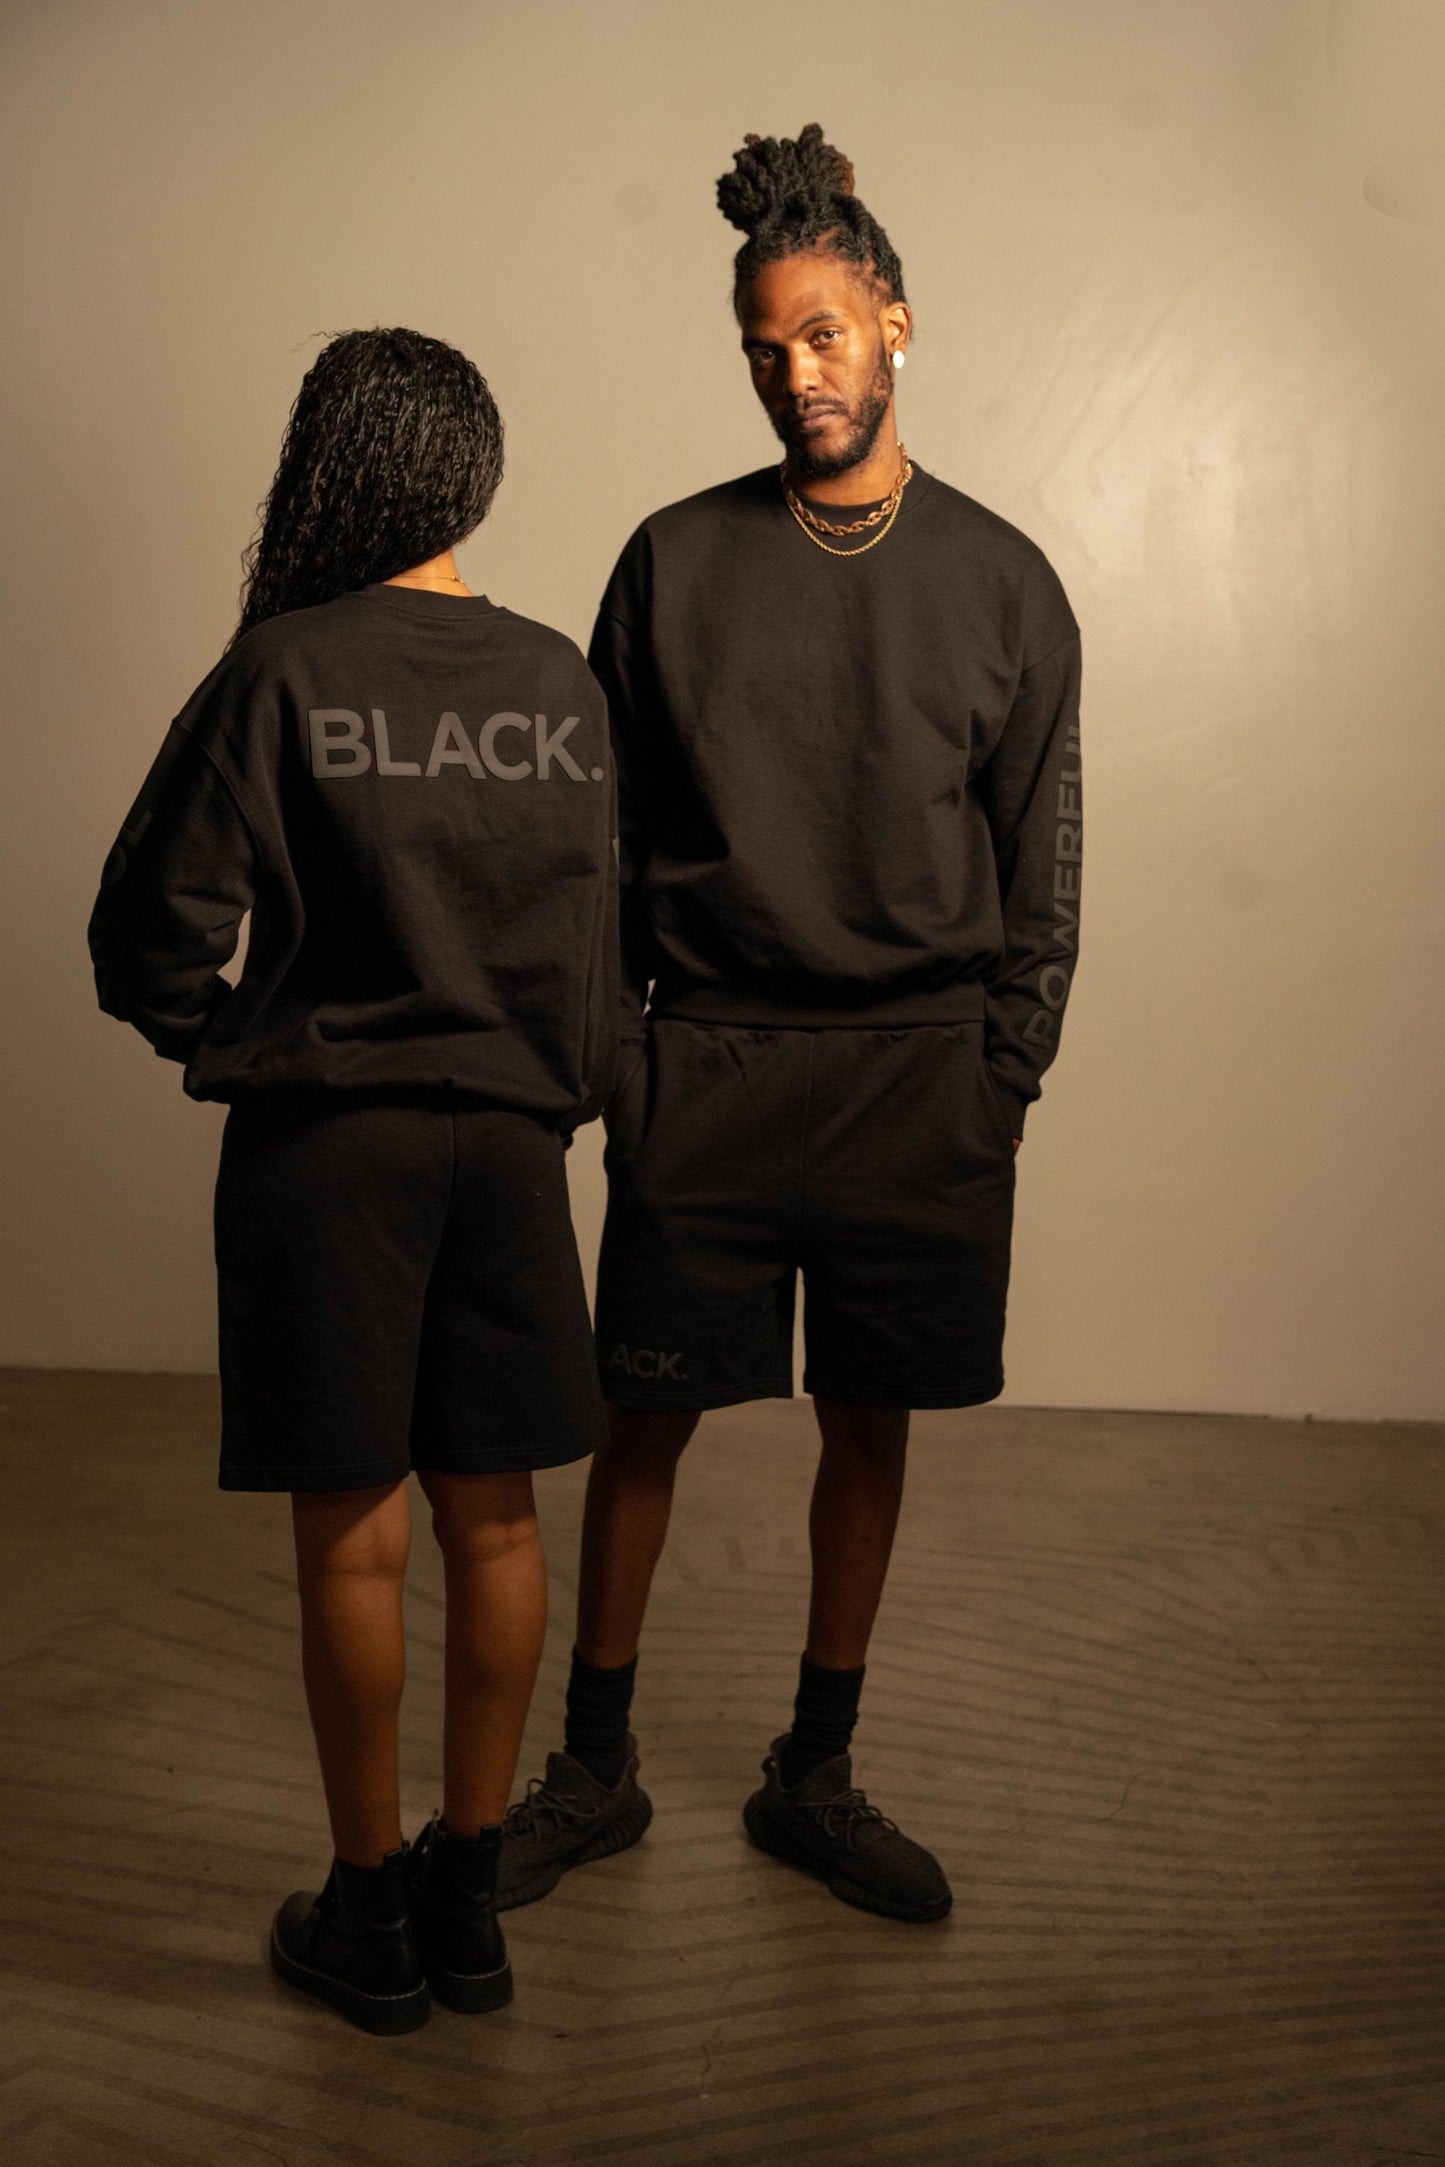 BLACK. Sweatshirt